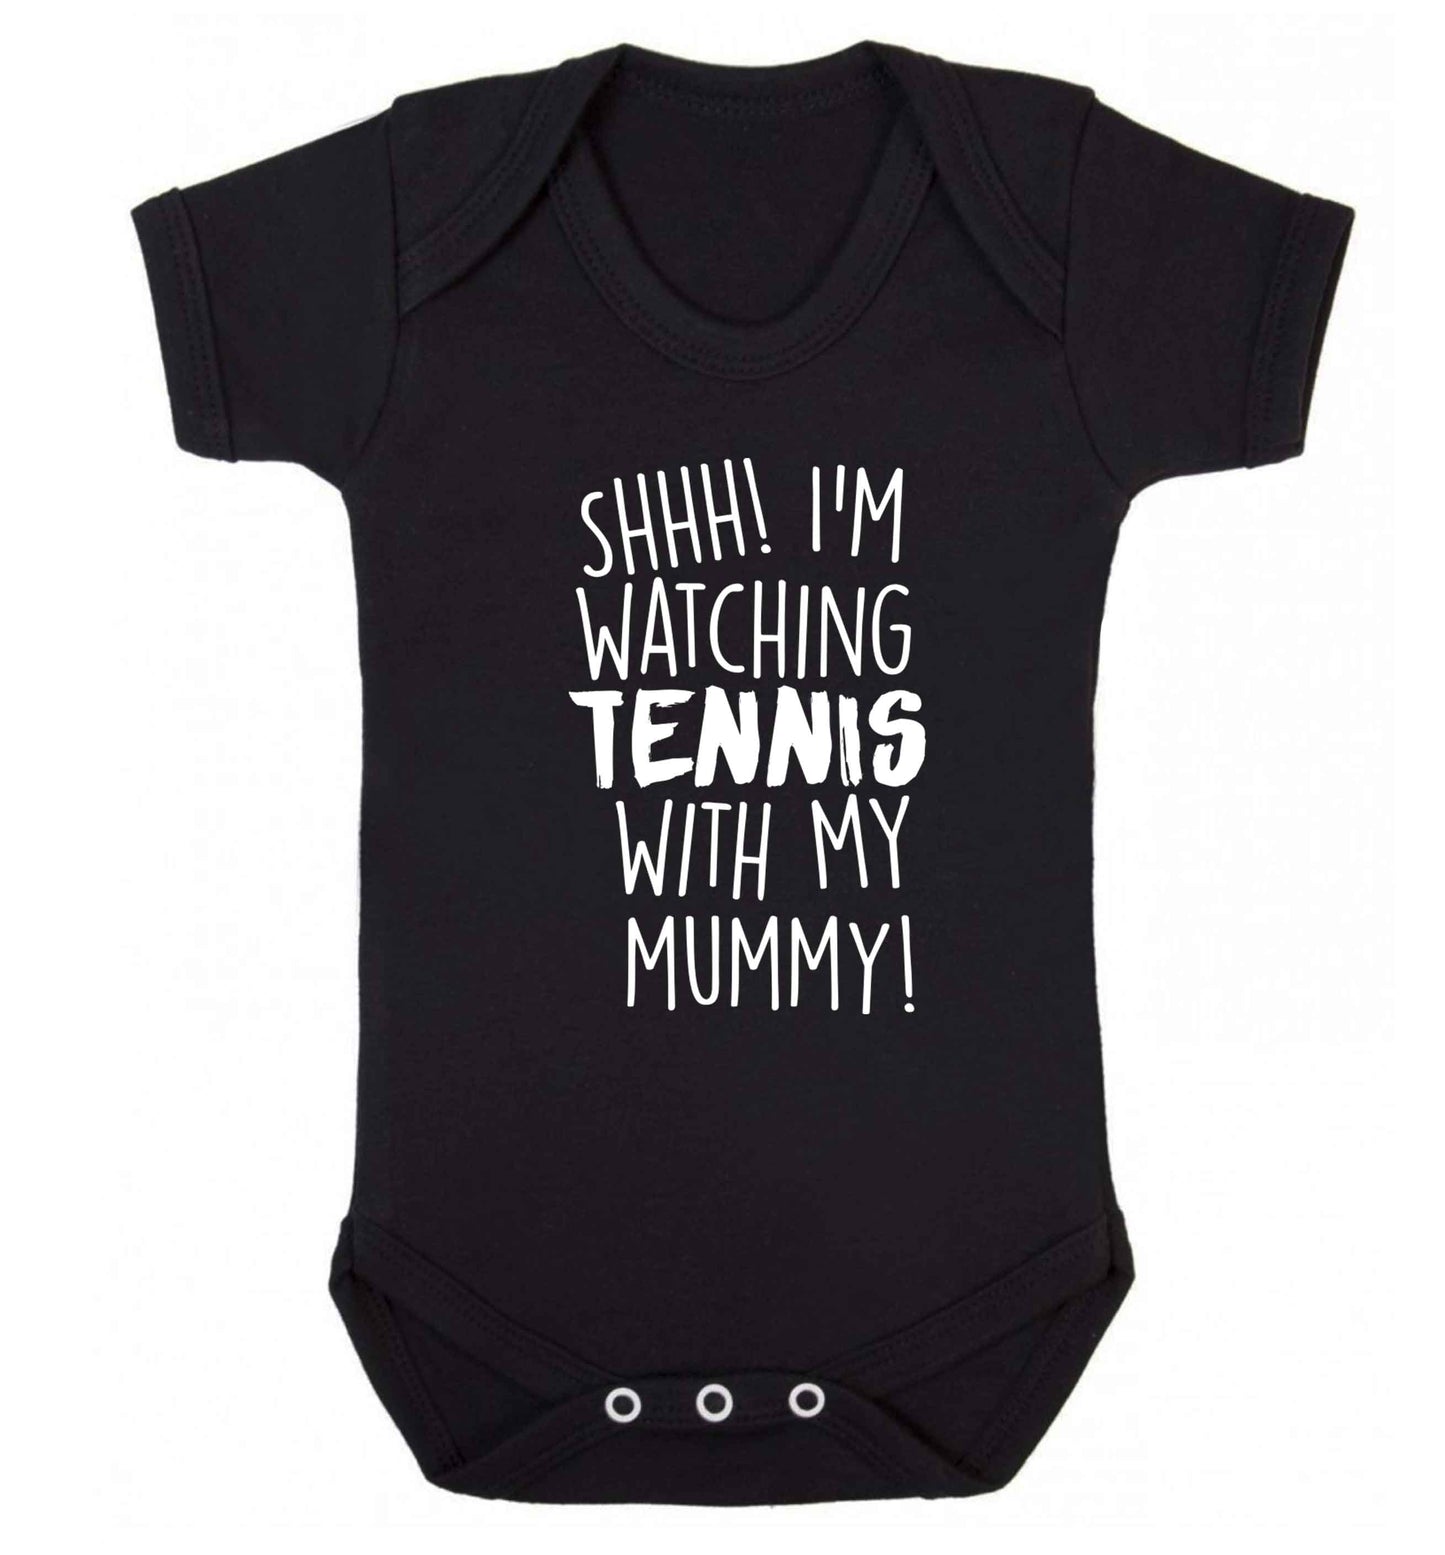 Shh! I'm watching tennis with my mummy! Baby Vest black 18-24 months